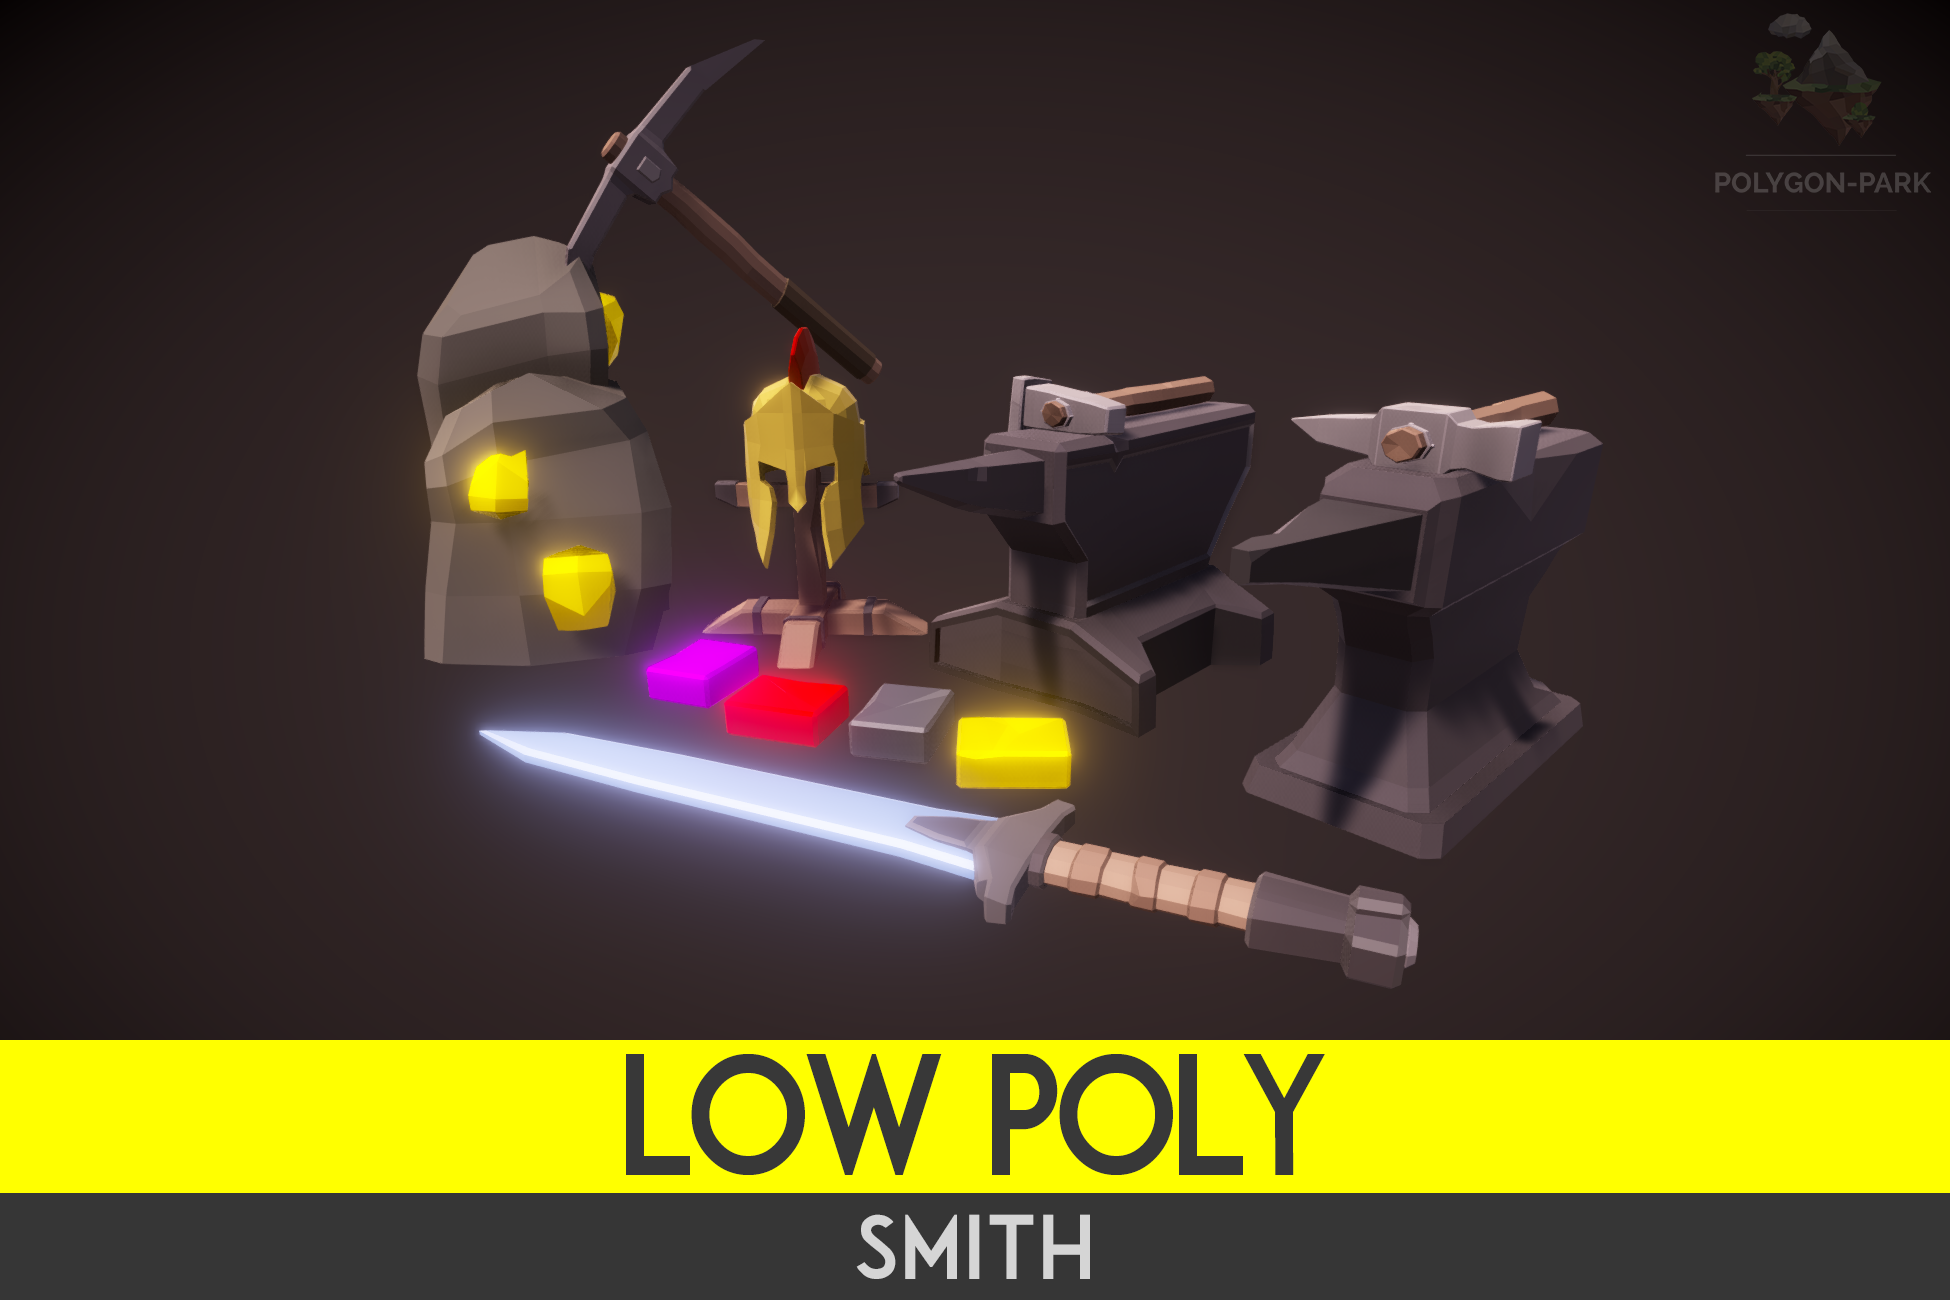 Low Poly Smith